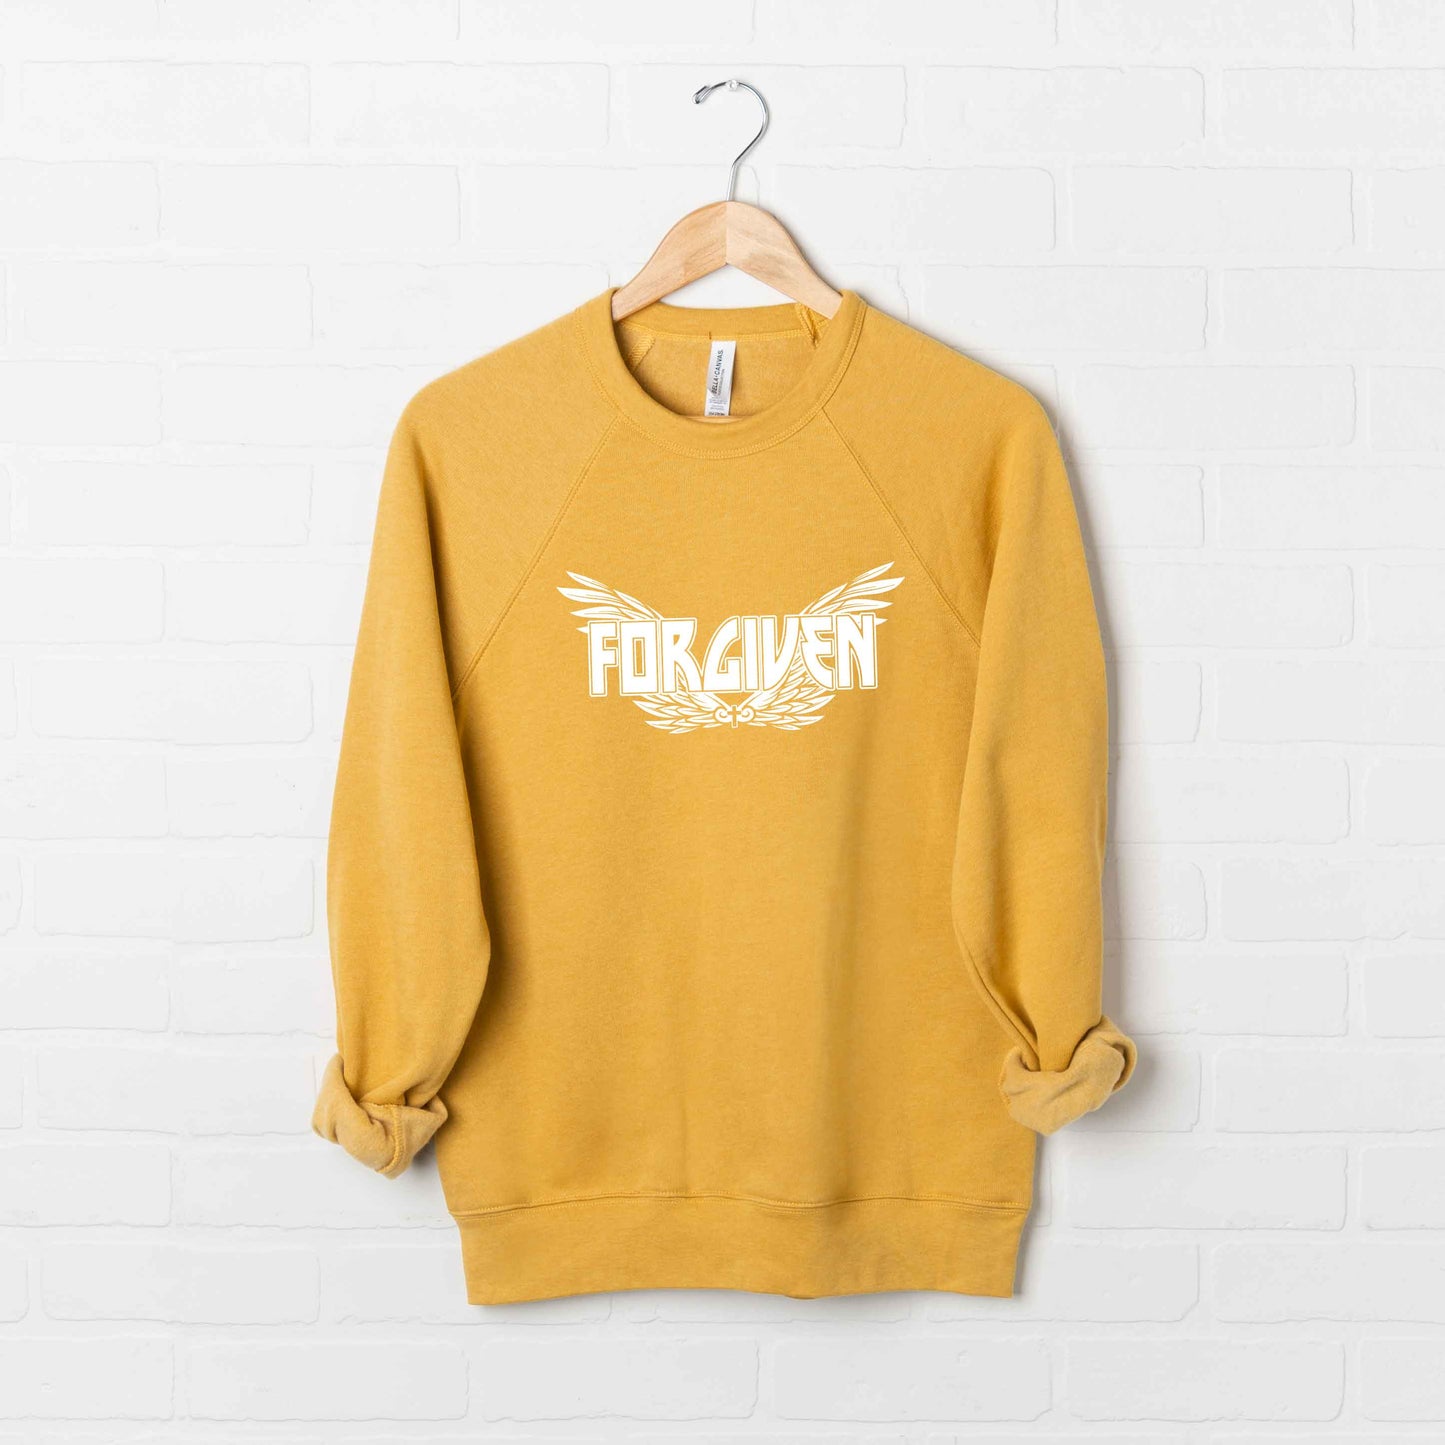 Forgiven Wings | Bella Canvas Premium Sweatshirt